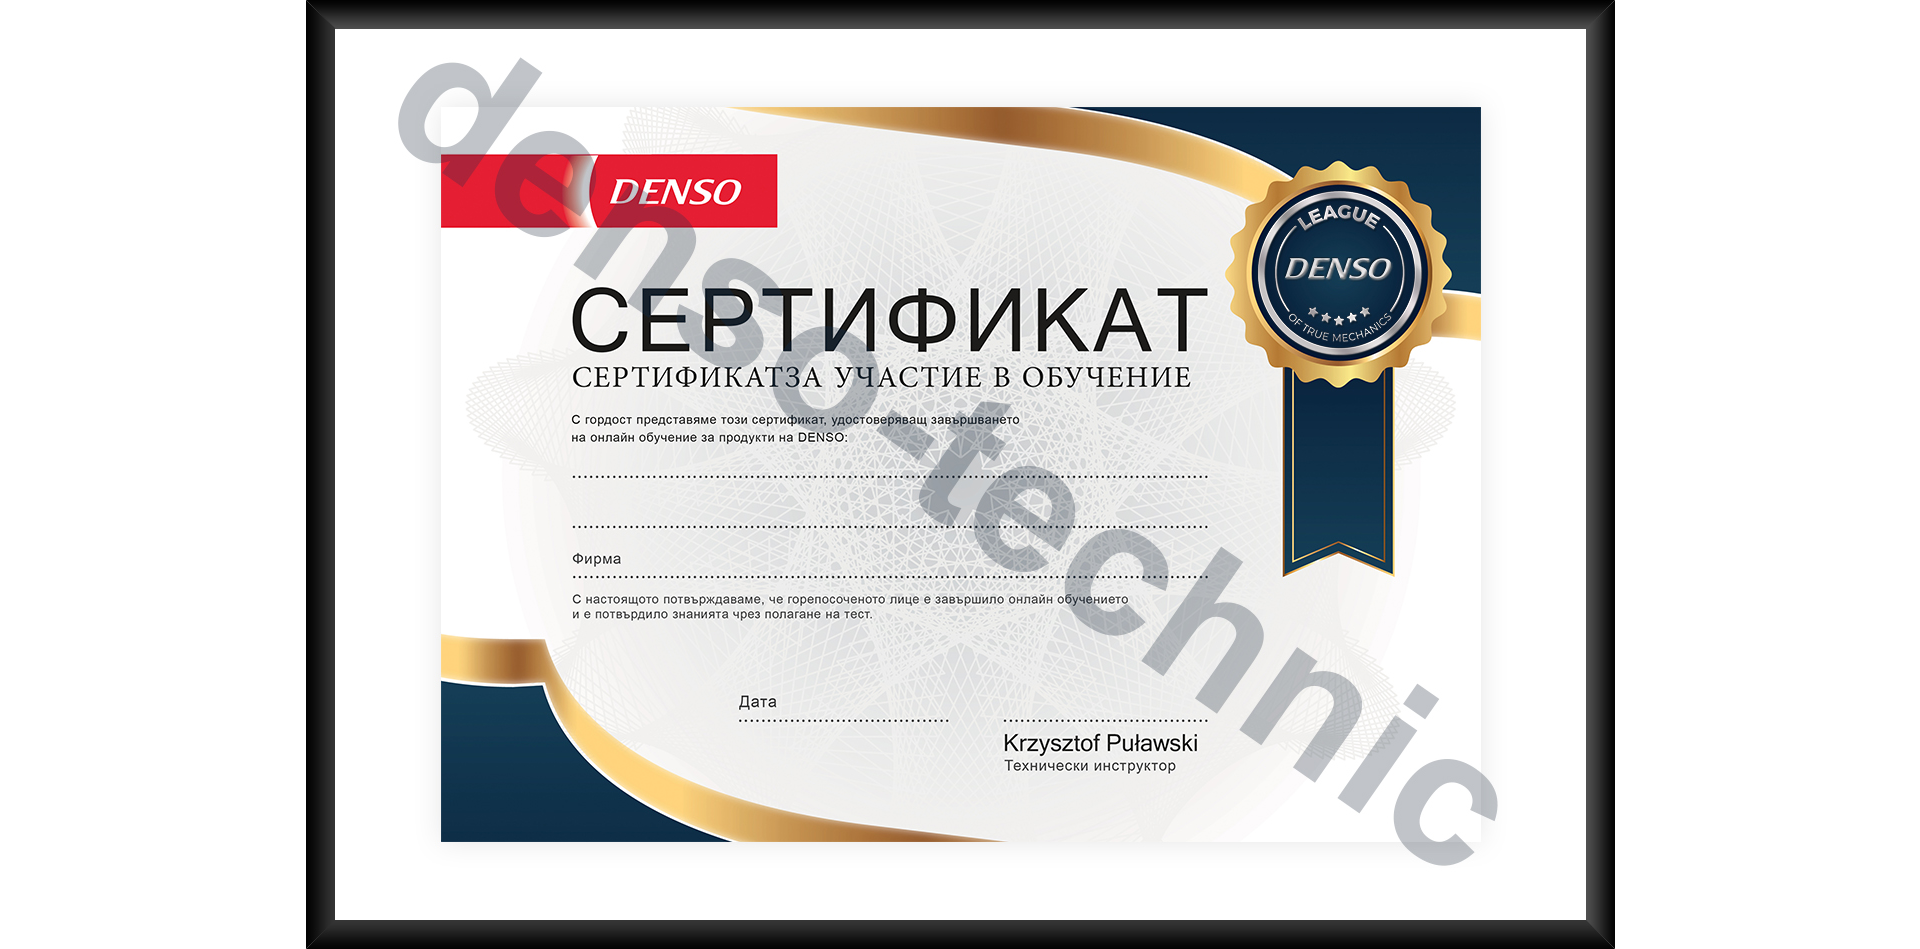 DENSO - Сертификат